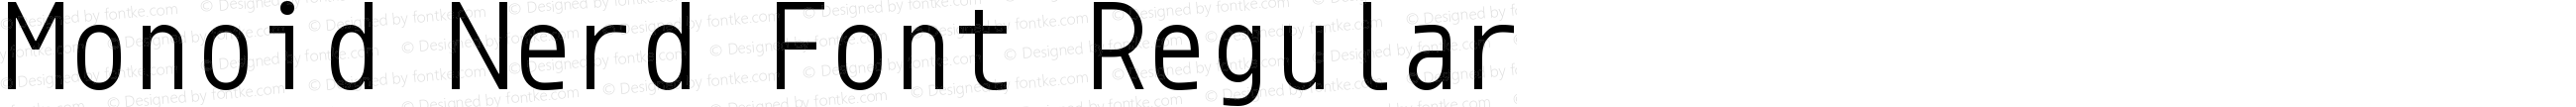 Monoid Regular Nerd Font Complete Mono